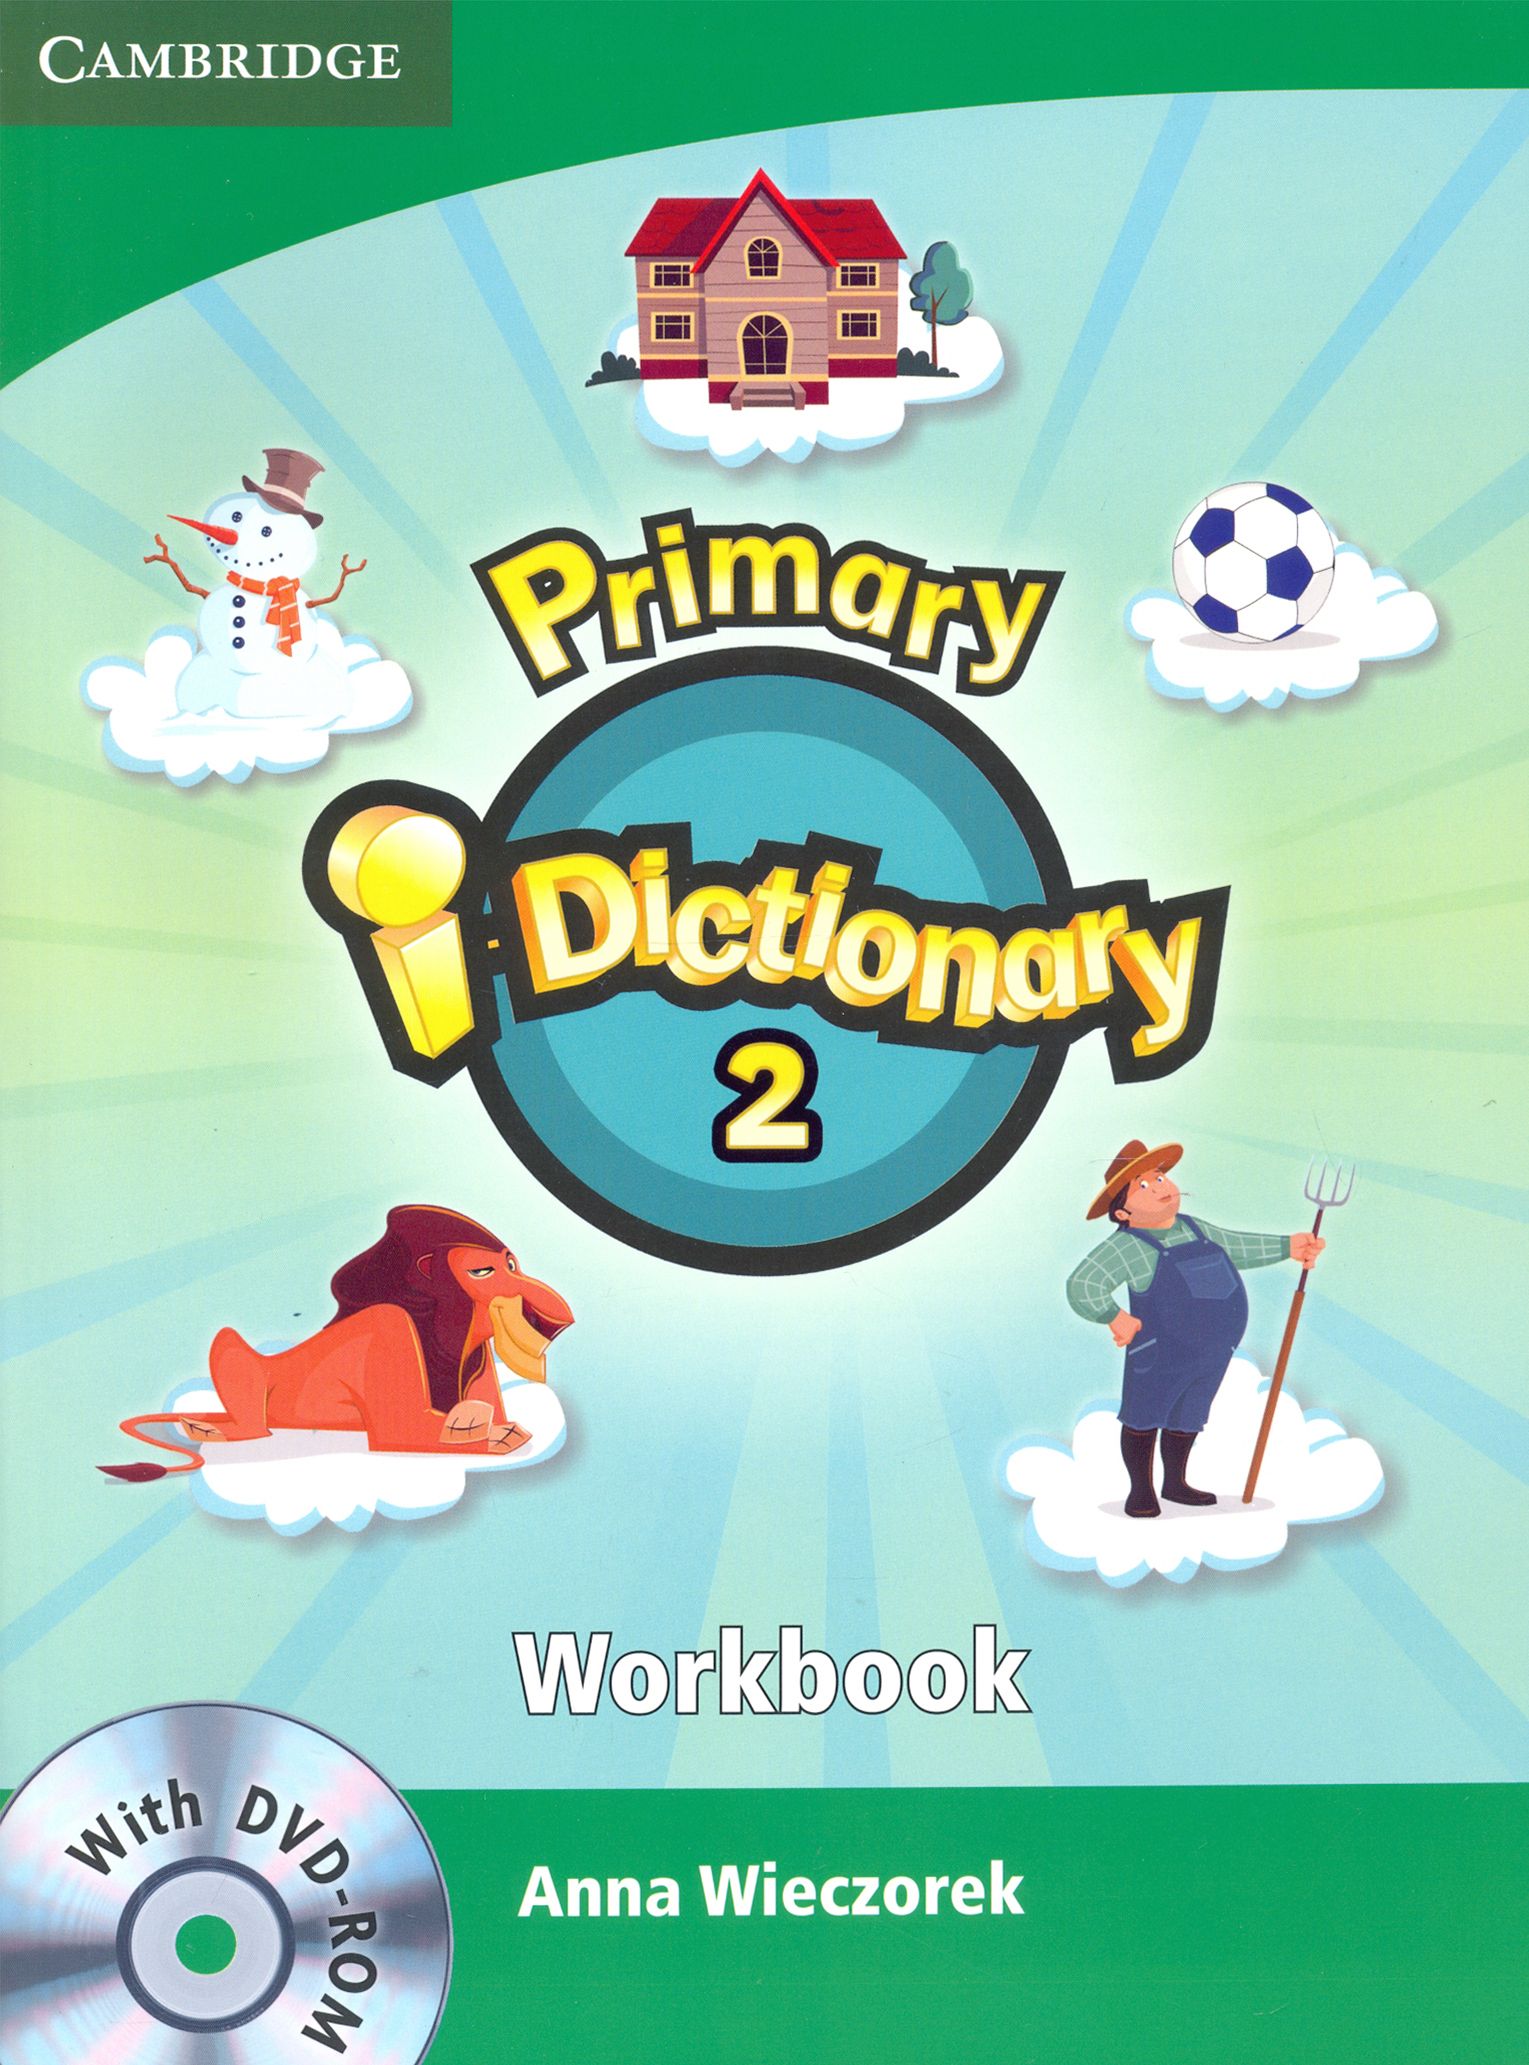 Primary i Dictionary. Primary i Dictionary 2. Primary i Dictionary 1. Cambridge Primary Dictionary. Two dictionary